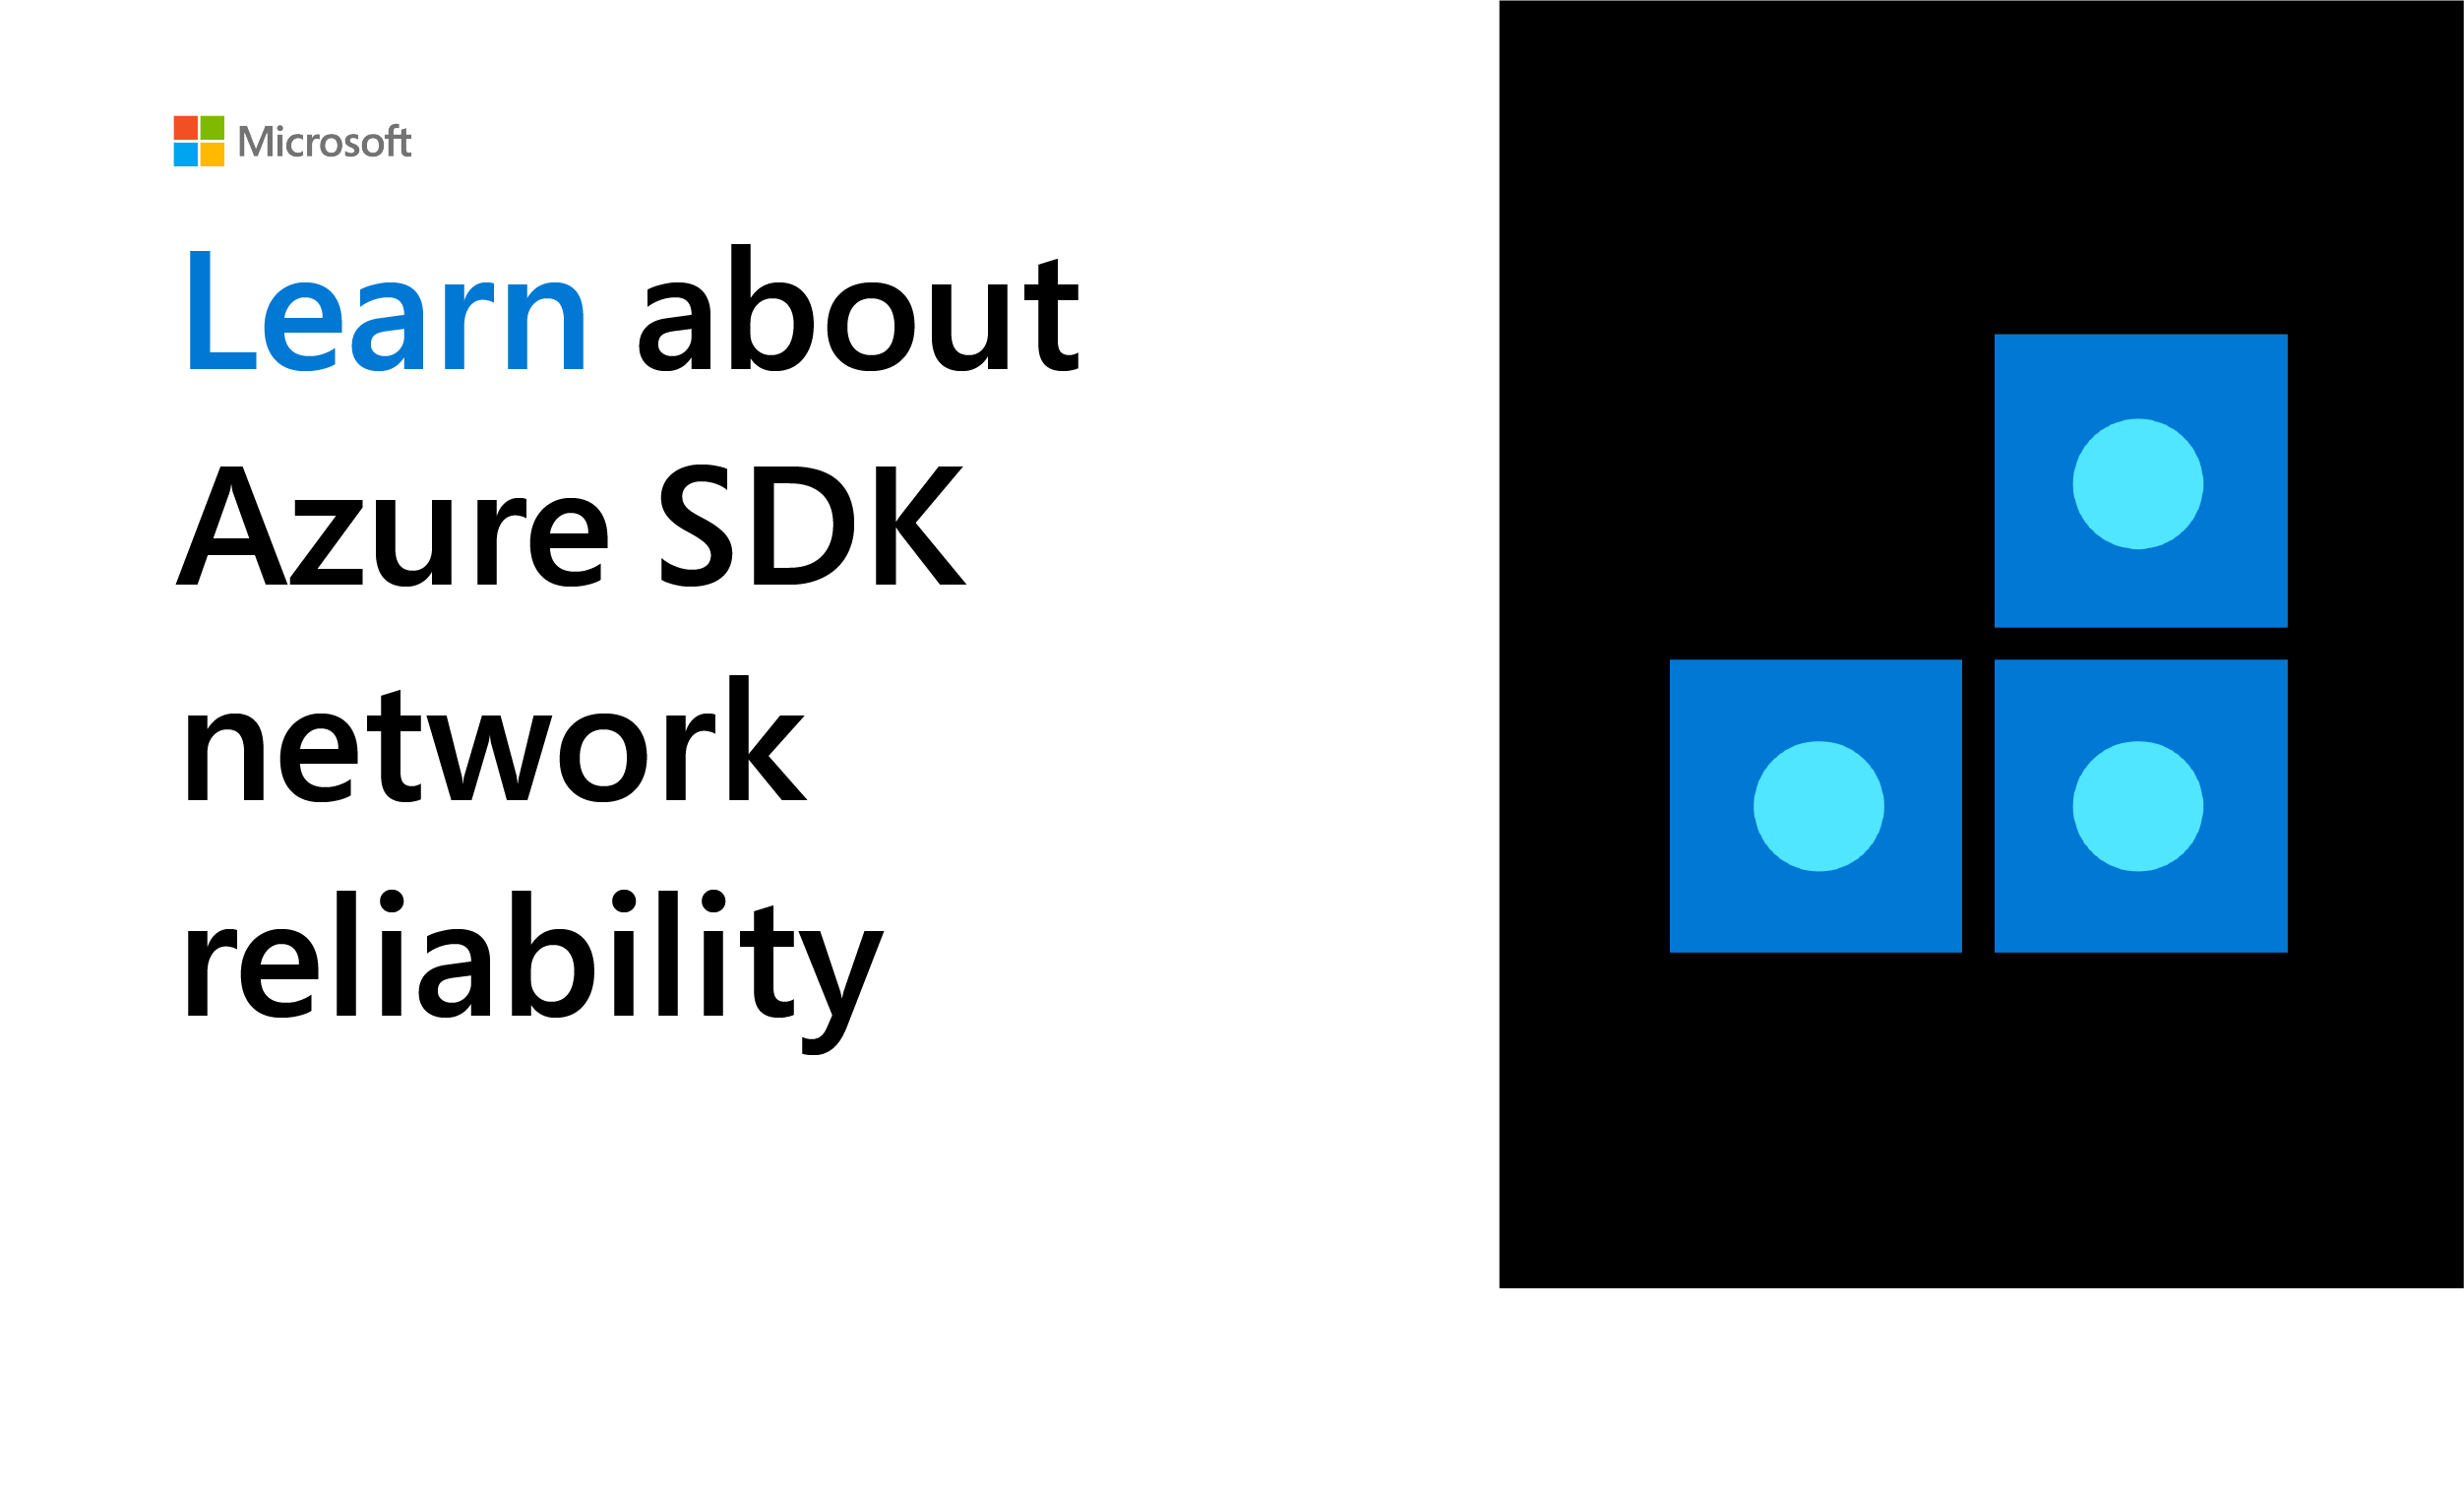 Azure SDK network reliability